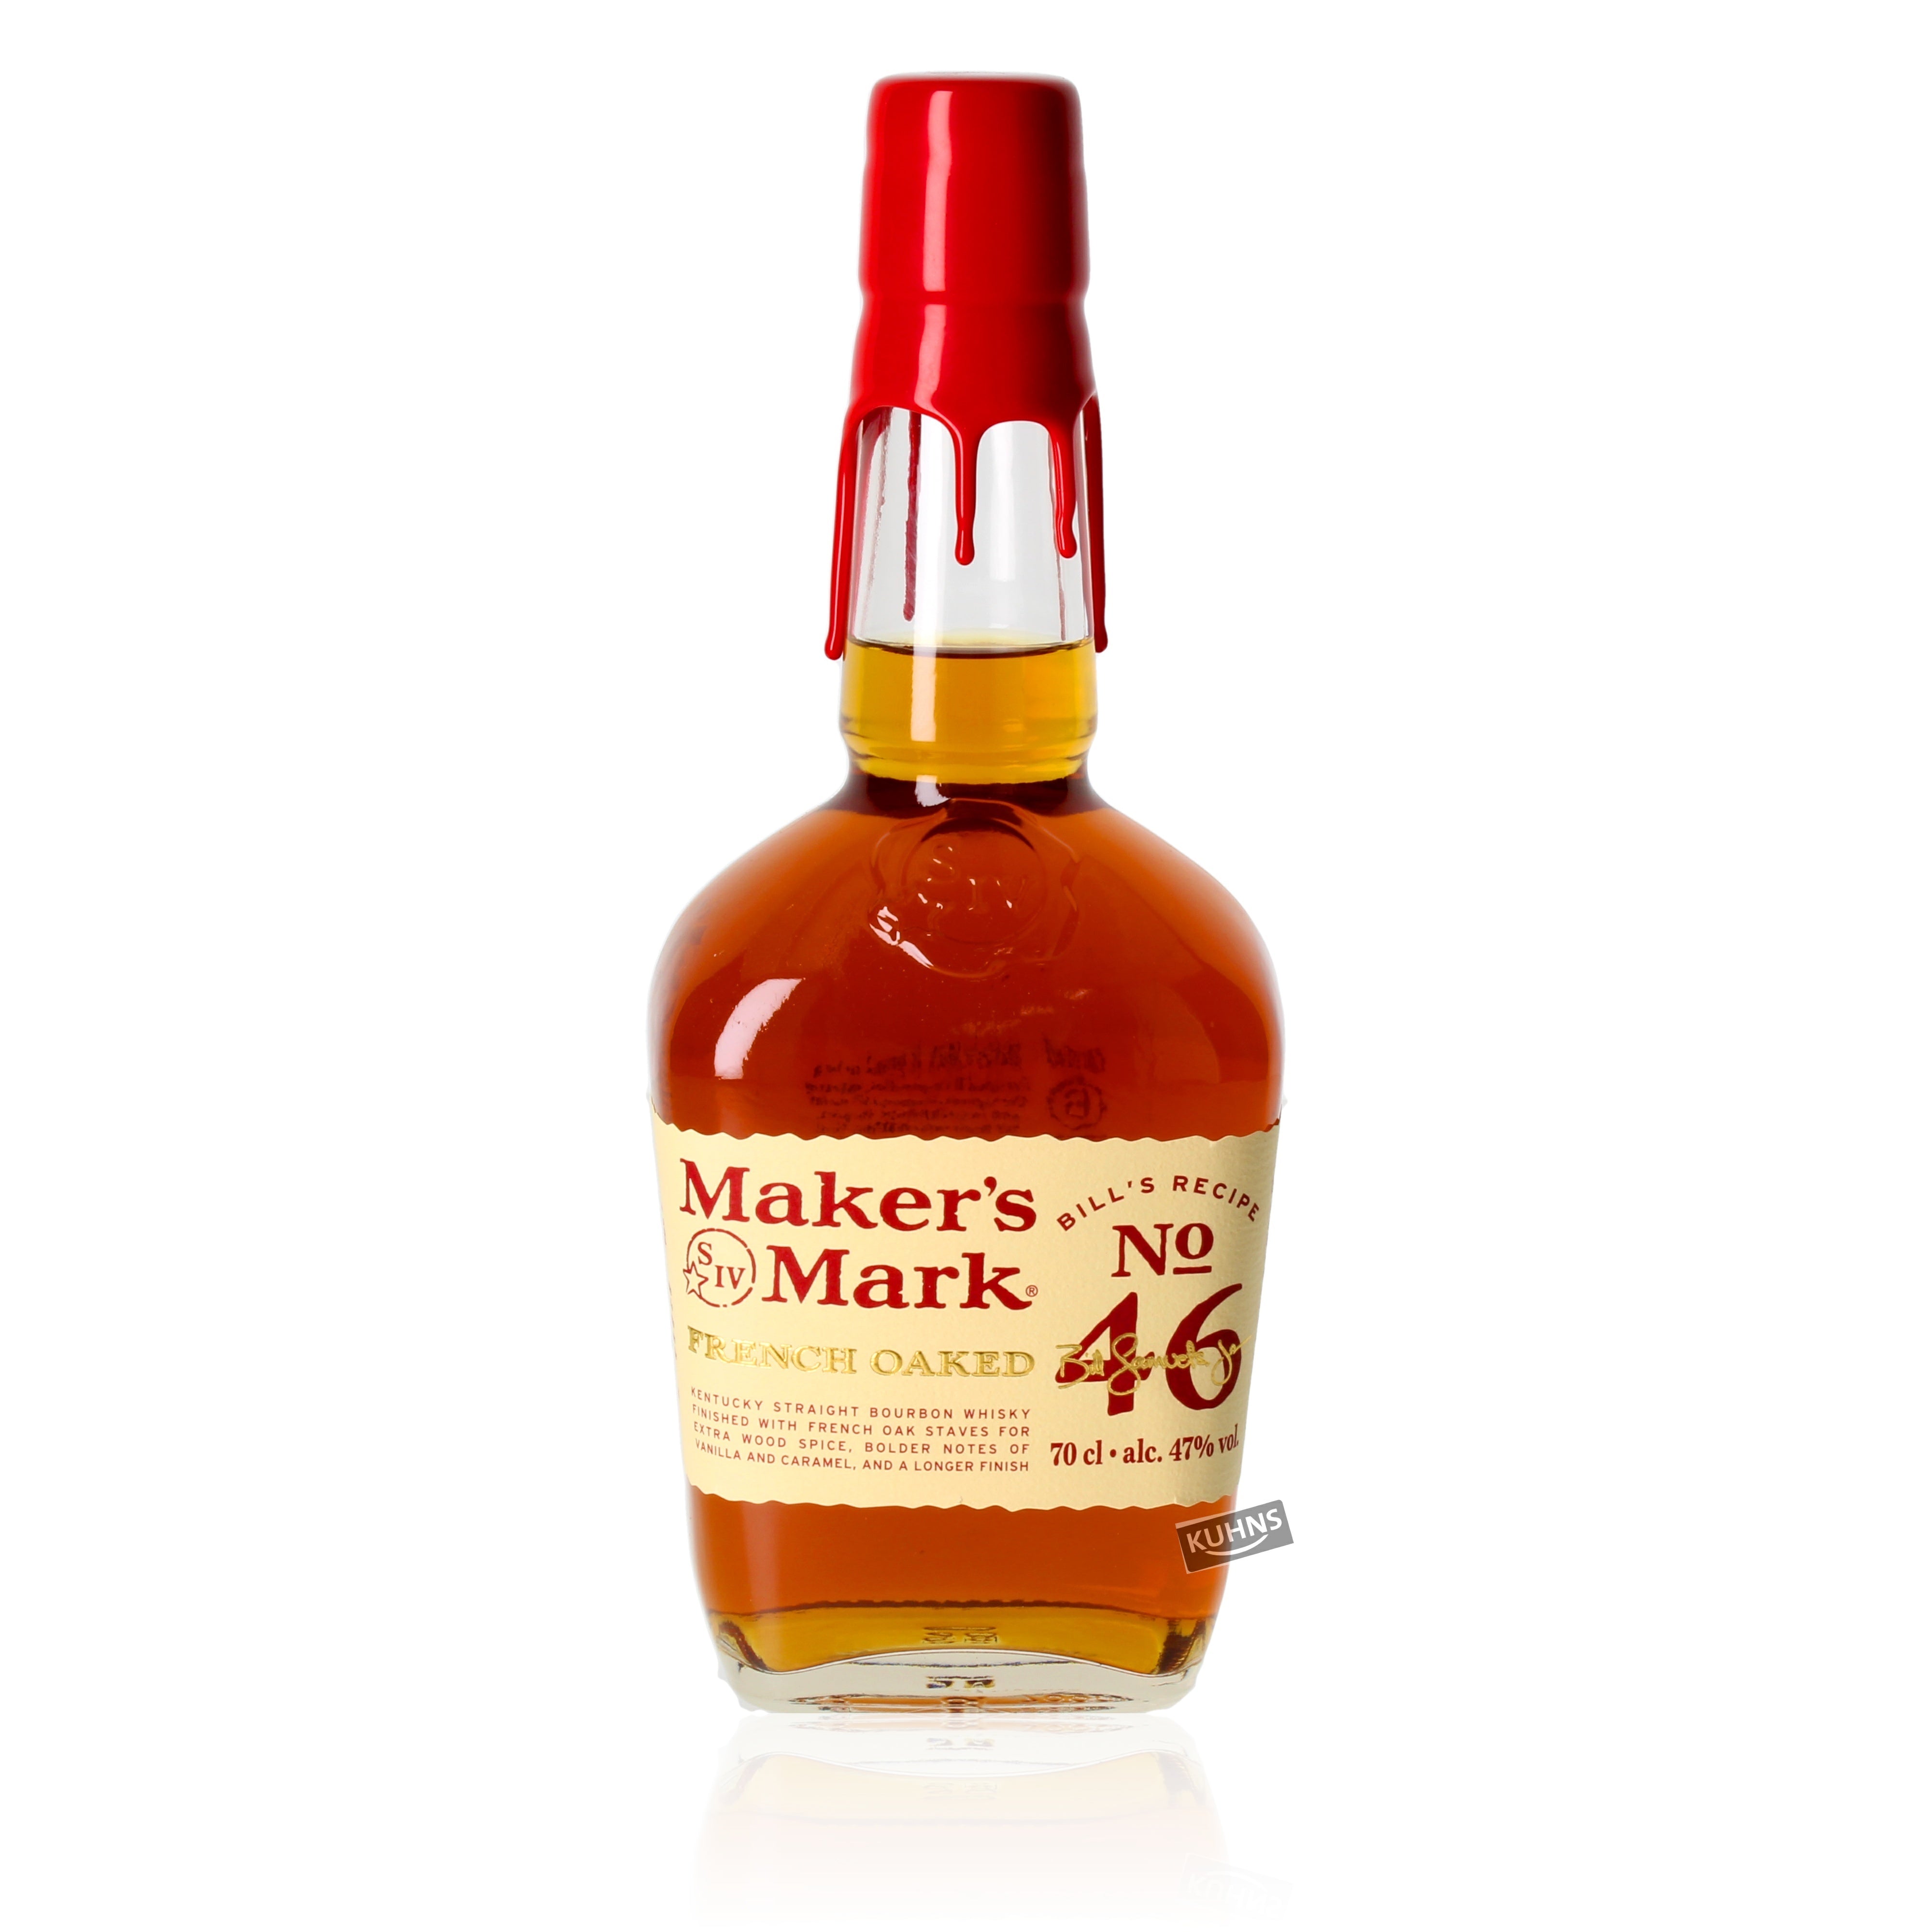 Maker's Mark 46 Kentucky Bourbon Whiskey 0.7l, alc. 47% by volume